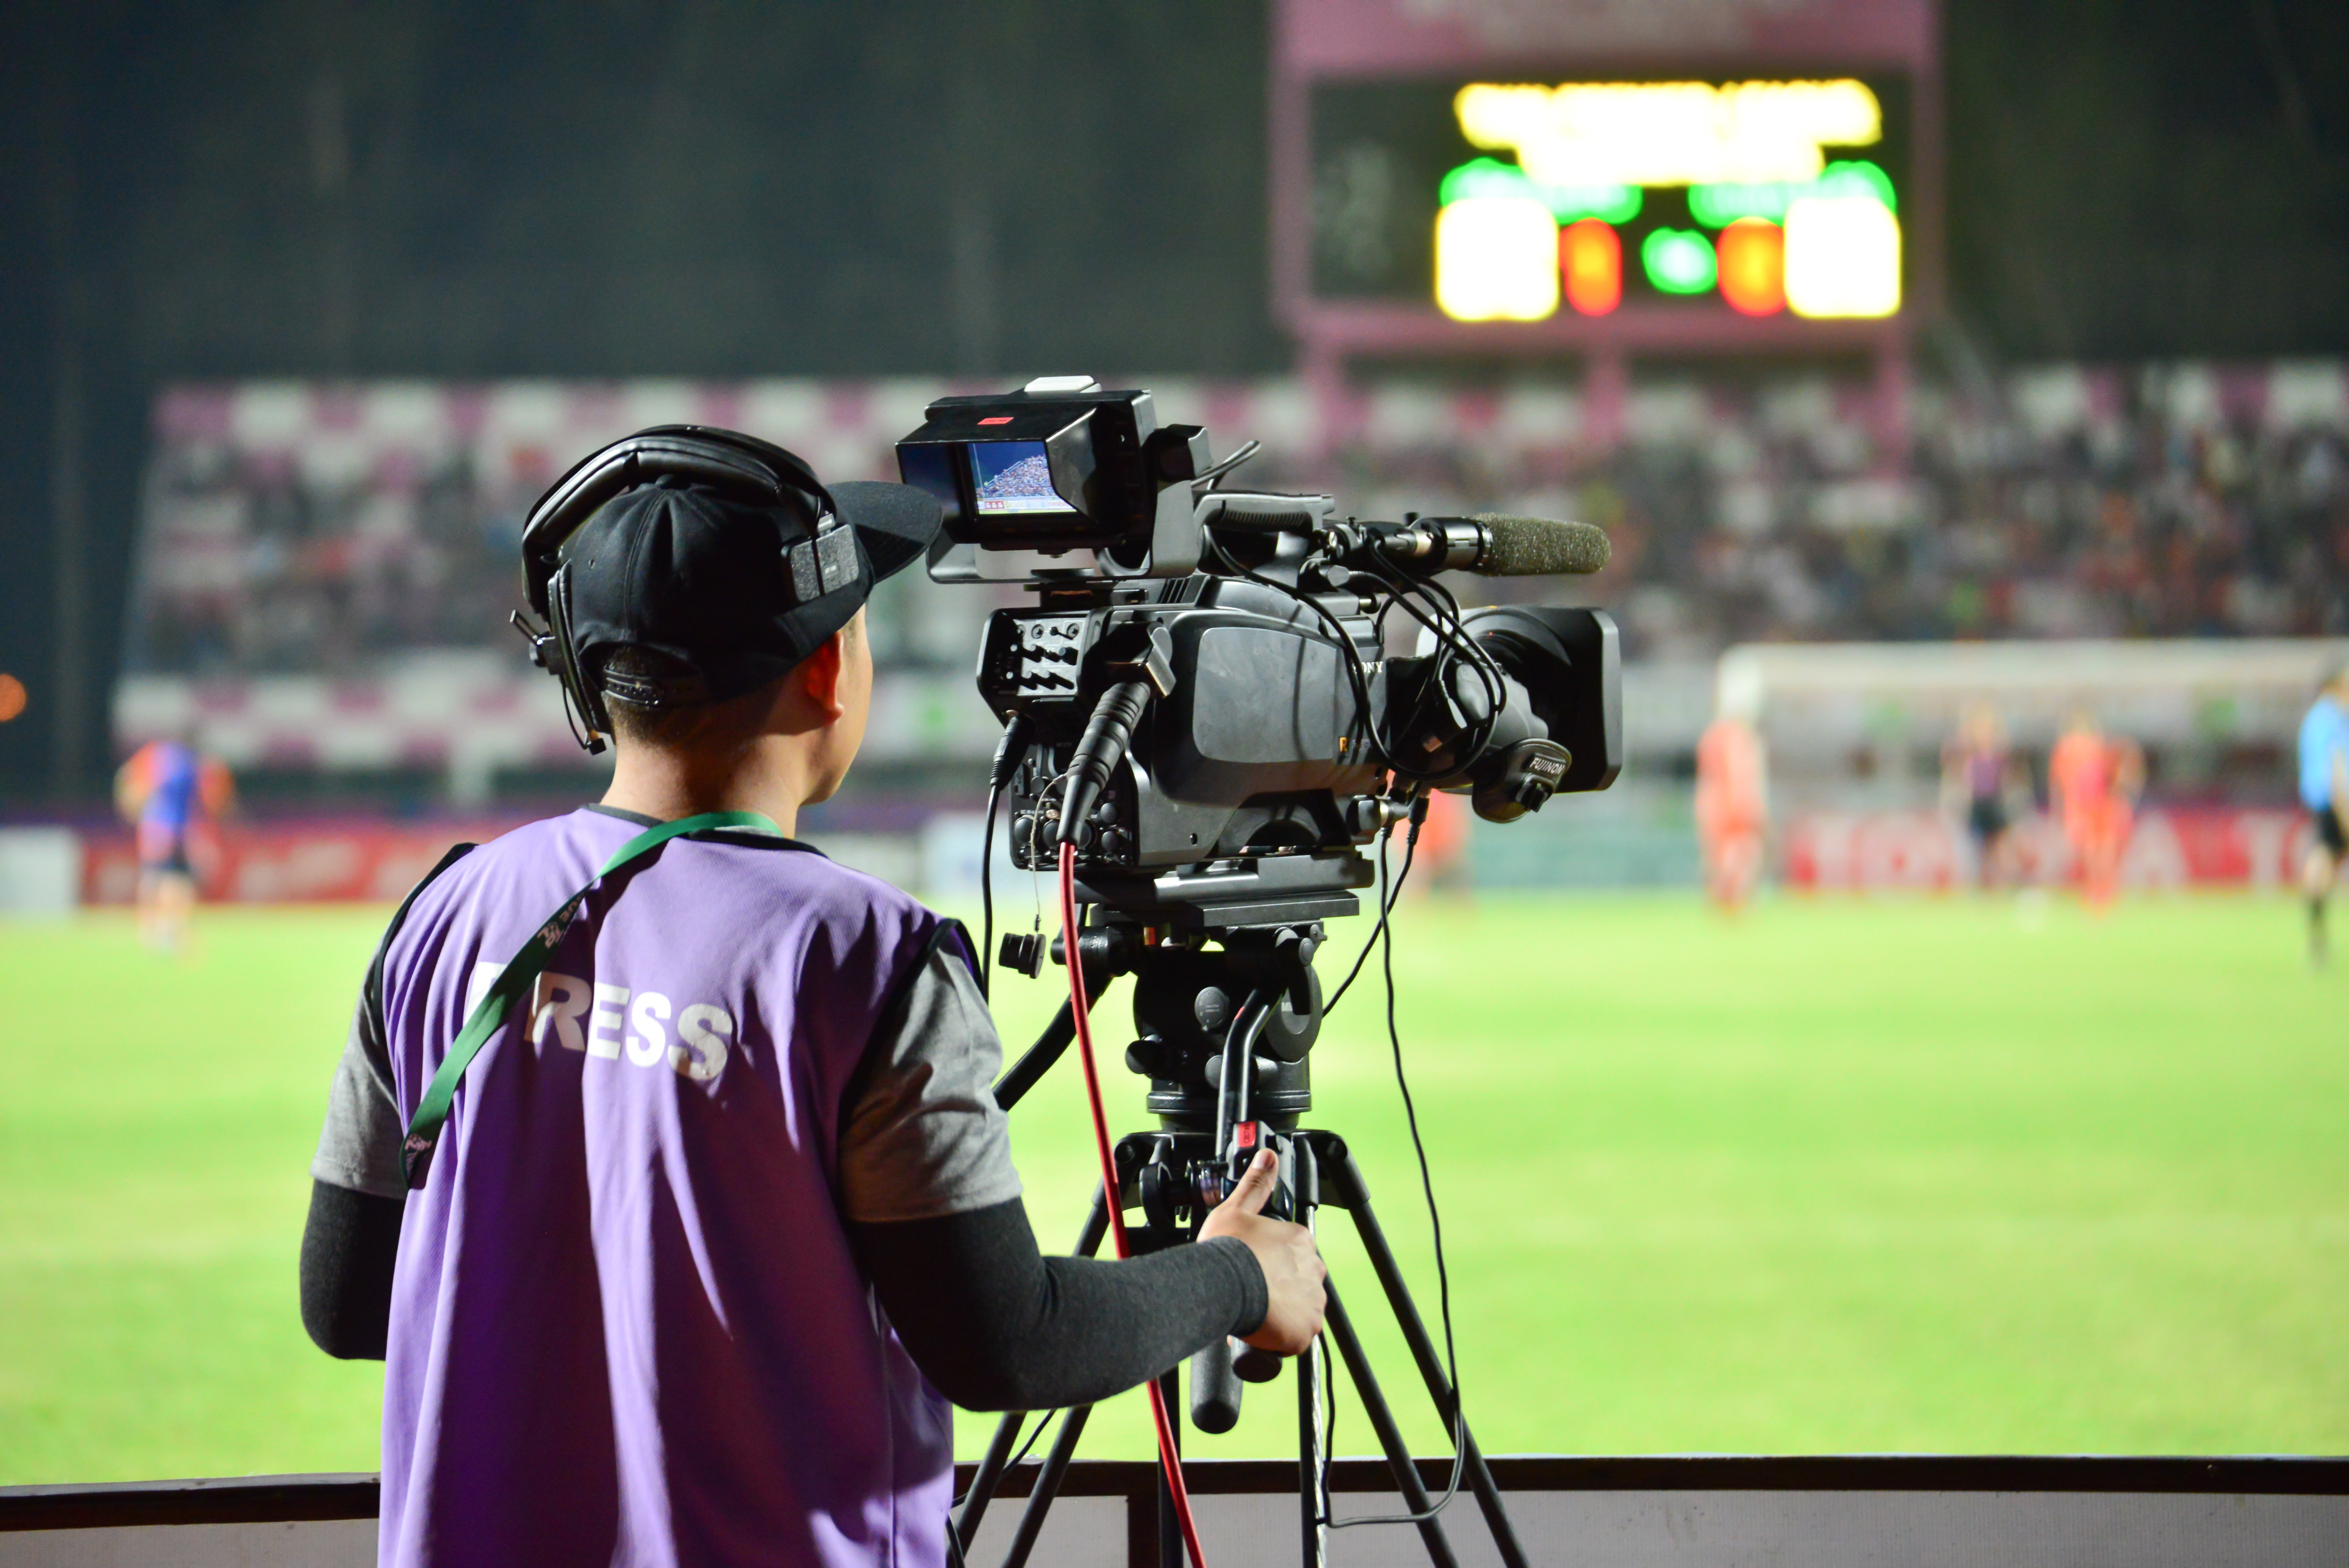 Sport бесплатная трансляция. Видеооператор футбол. Видеооператор на стадионе. Видеосъемка в спорте. Видеосъемка в футболе.